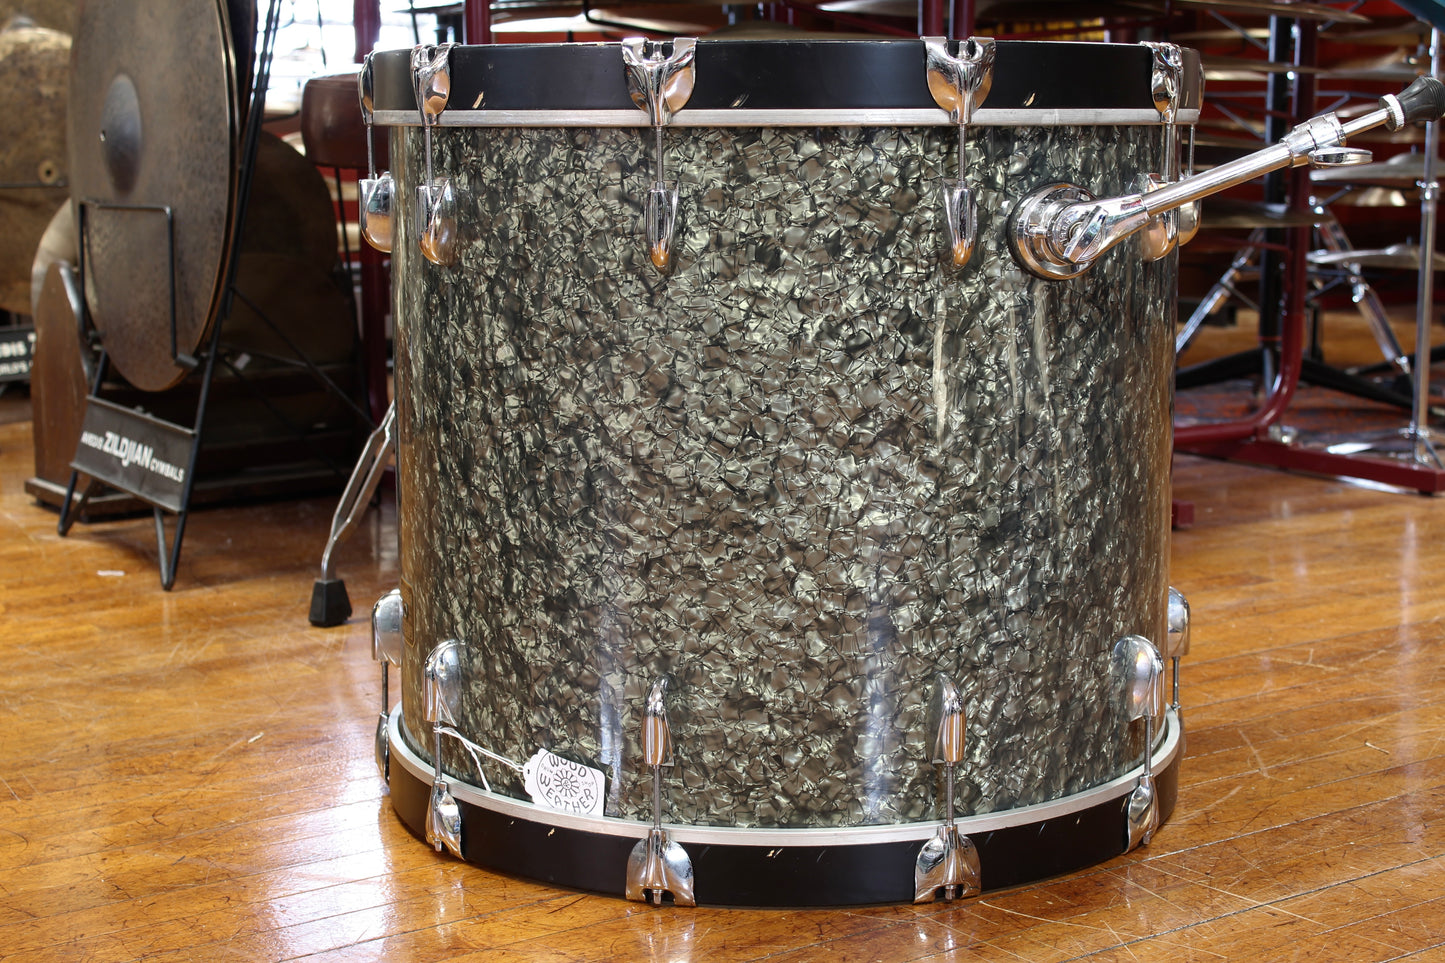 2008 Gretsch USA Custom 20"x24" Bass Drum in Black Diamond Pearl